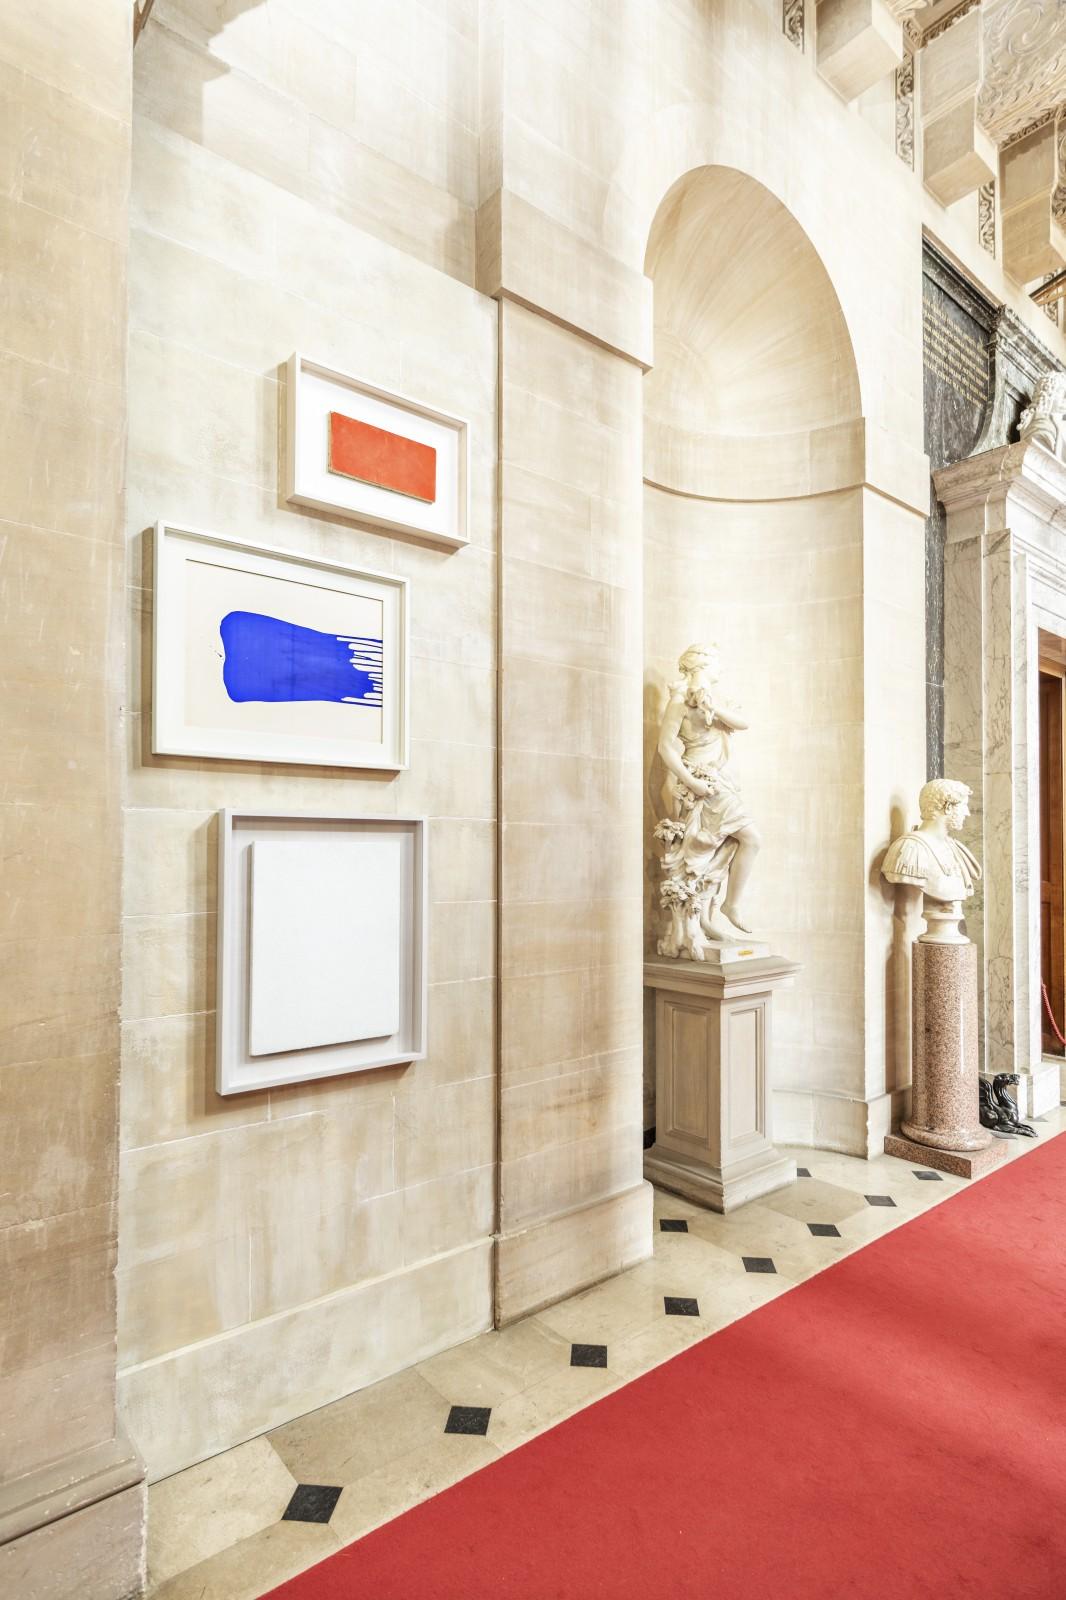 View of the exhibiton "Yves Klein", Blenheim Palace, 2018 (IKB 27, M 33, M 25)